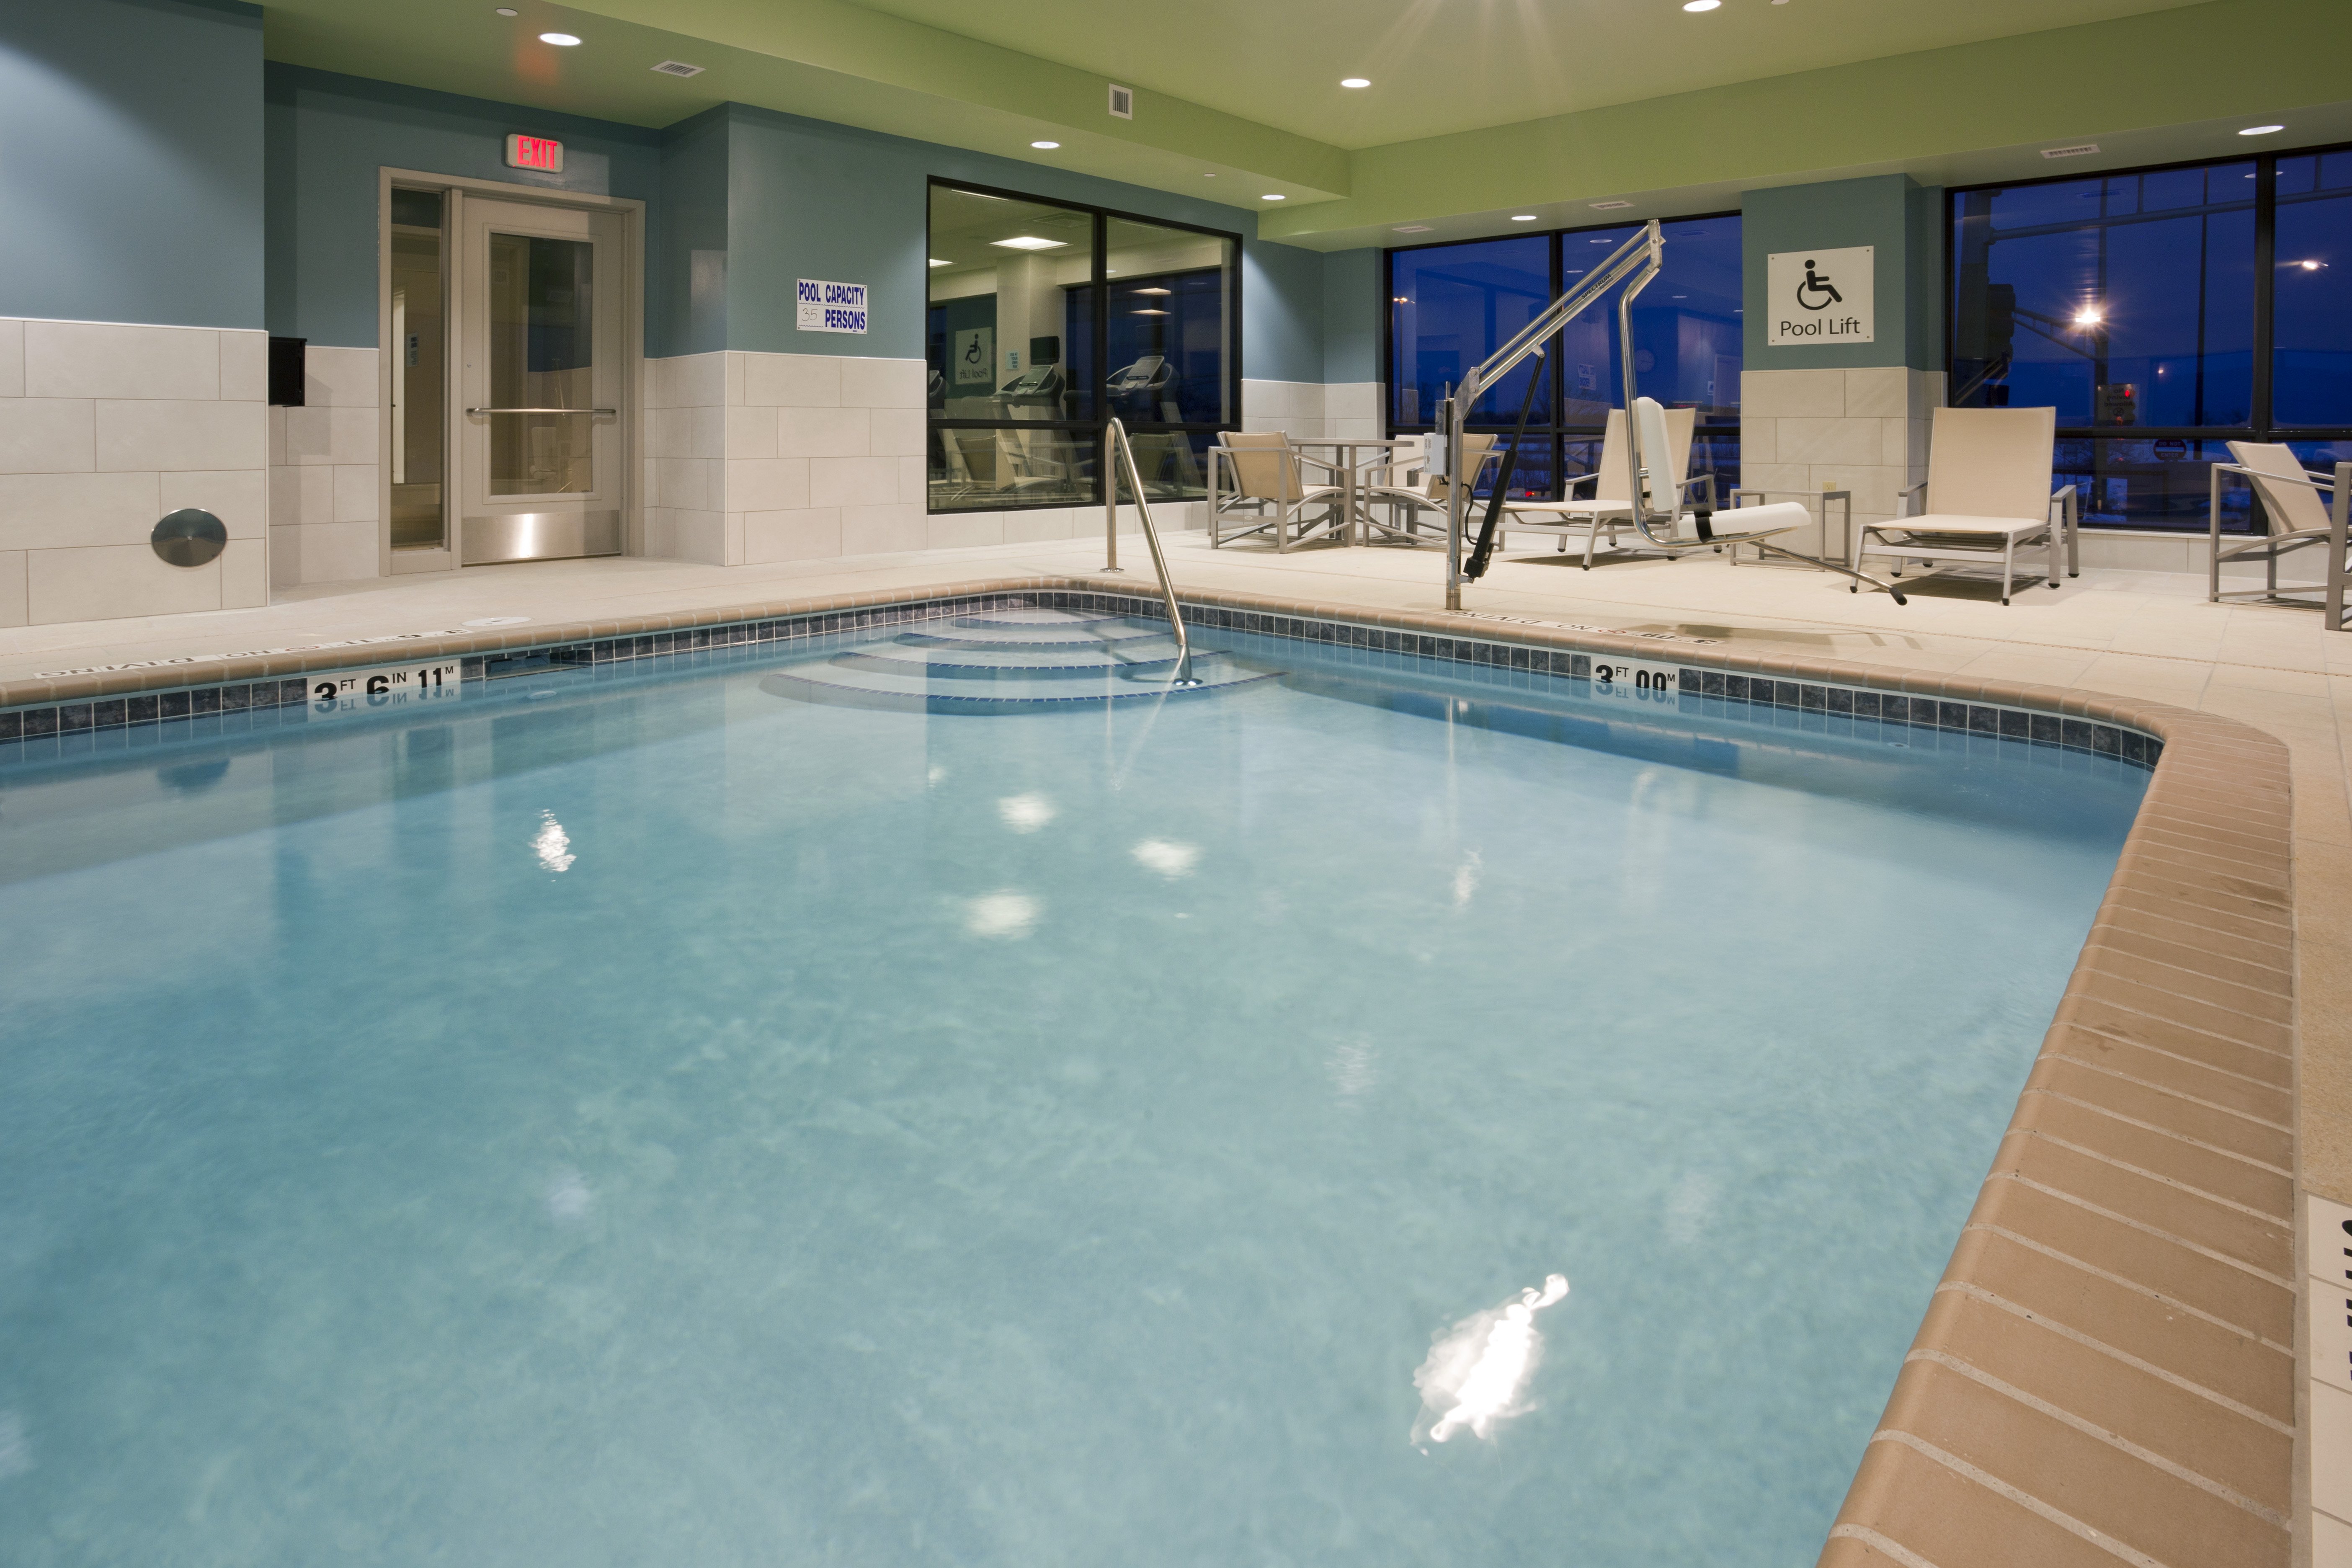 During your Roseville visit, splashdown in our indoor hotel pool!